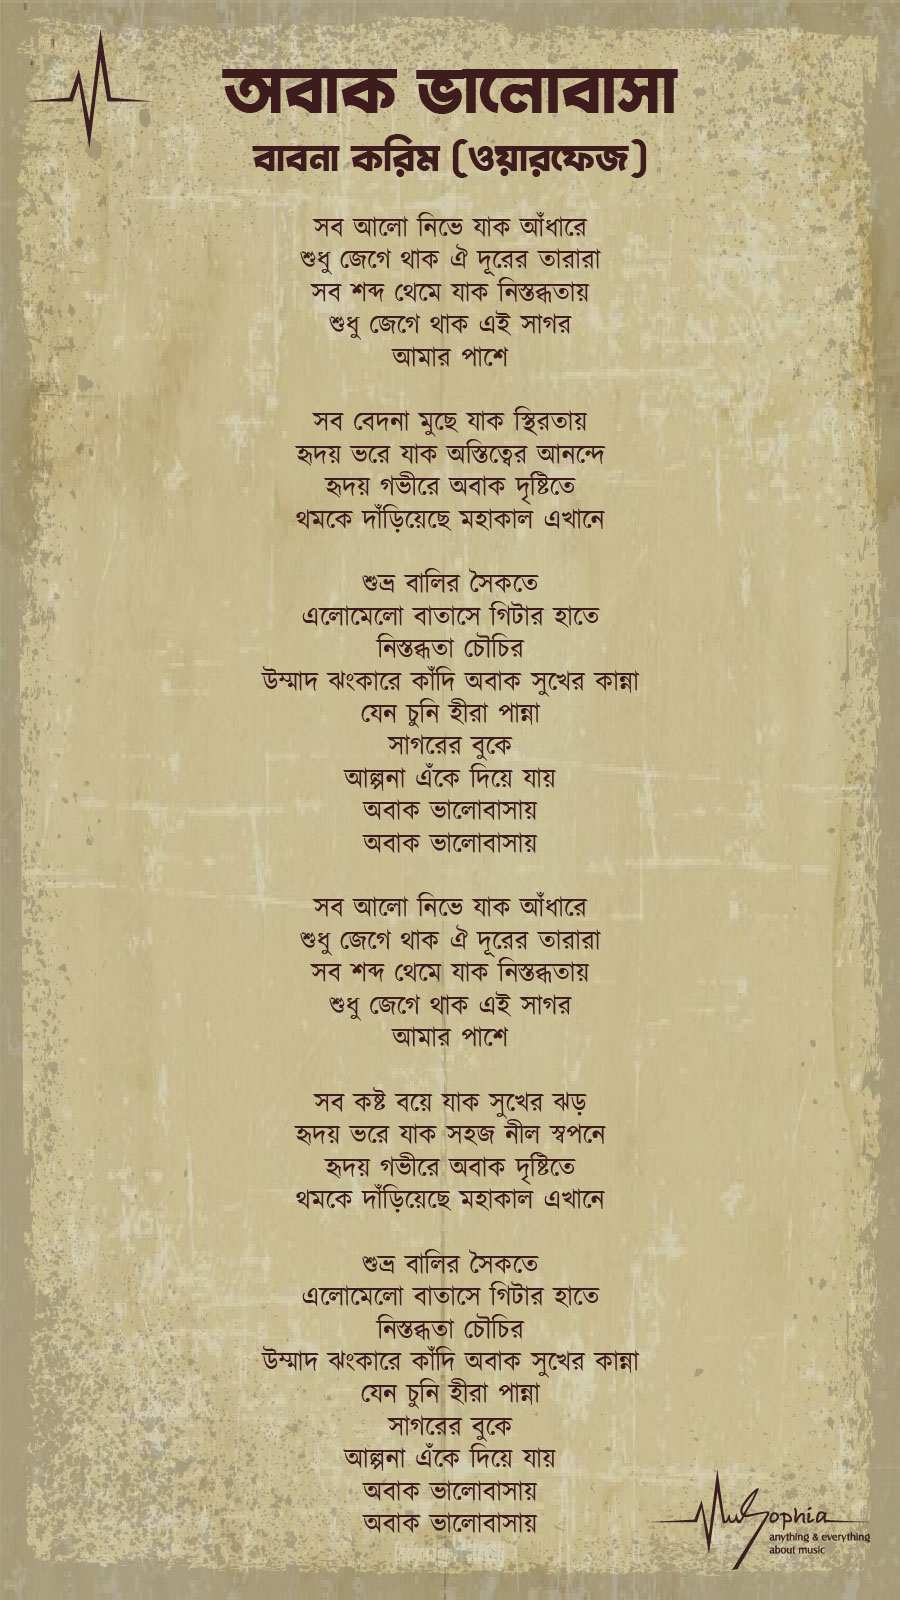 Obak Bhalobasha lyrics by Warfaze